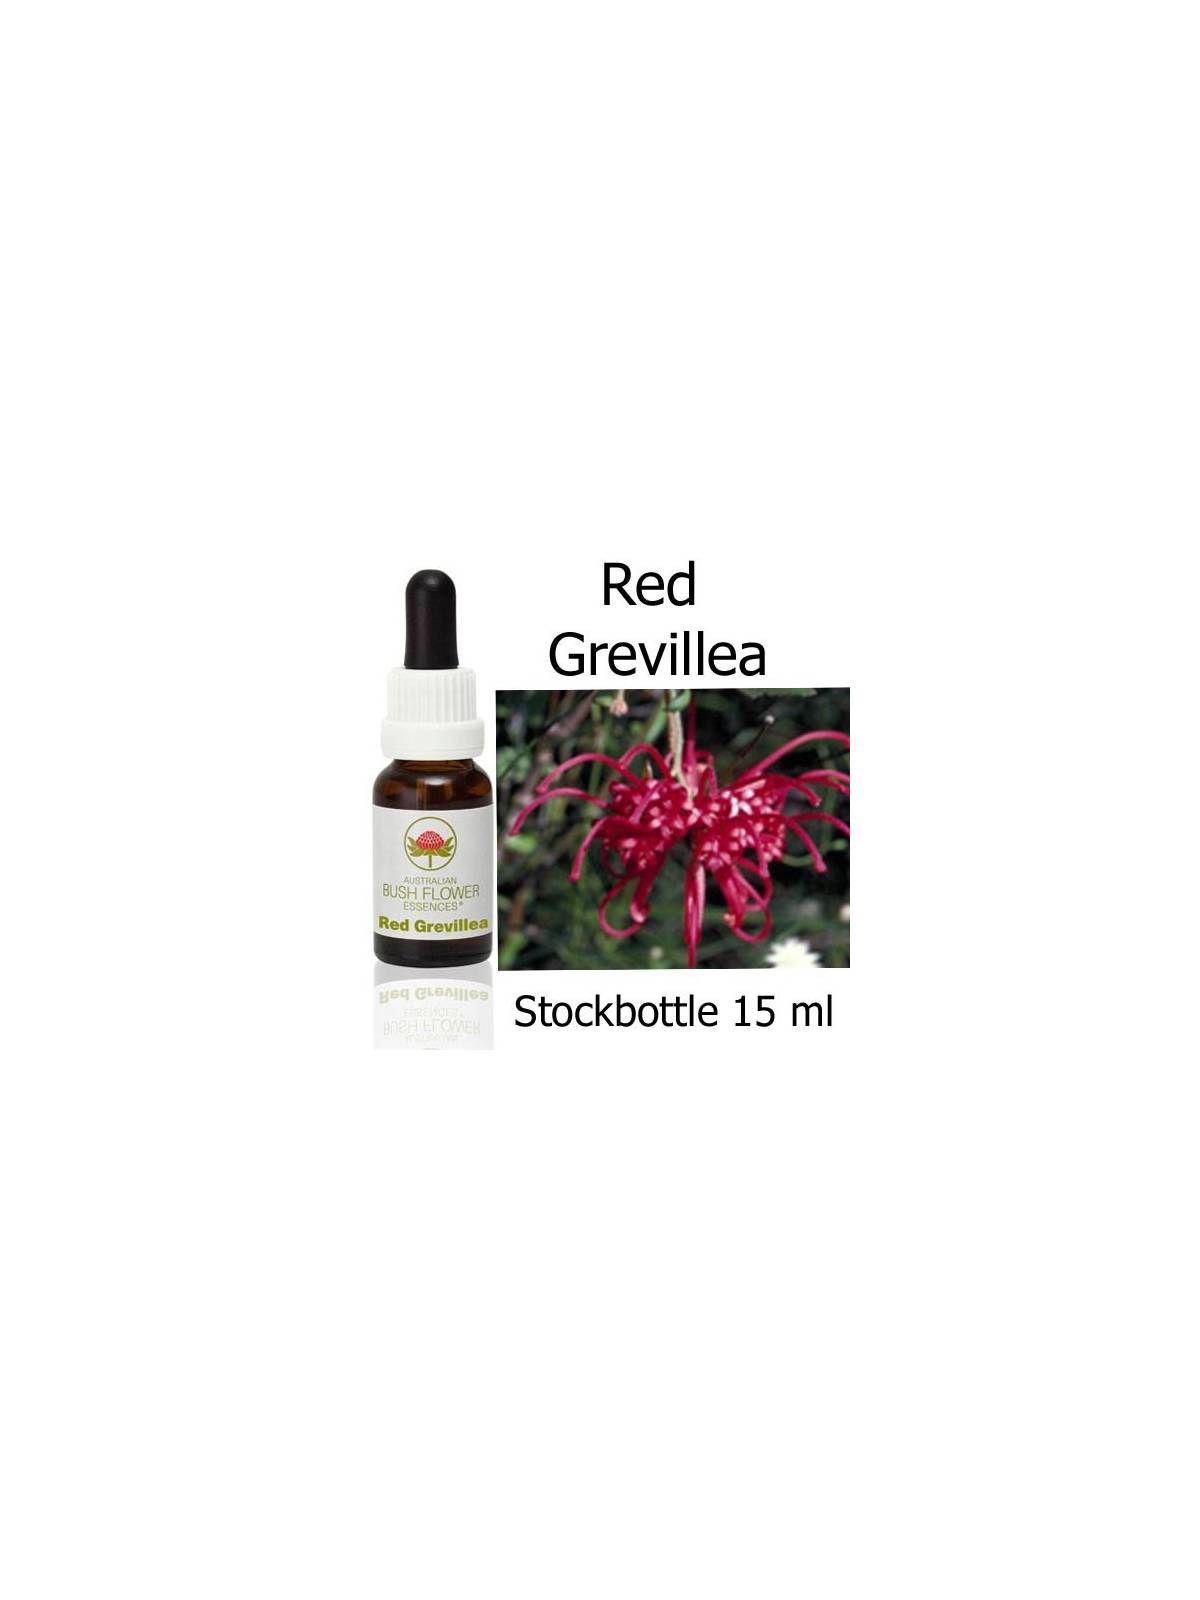 Fiori Australiani Red Grevillea Australian Bush Flower Essences stockbottles